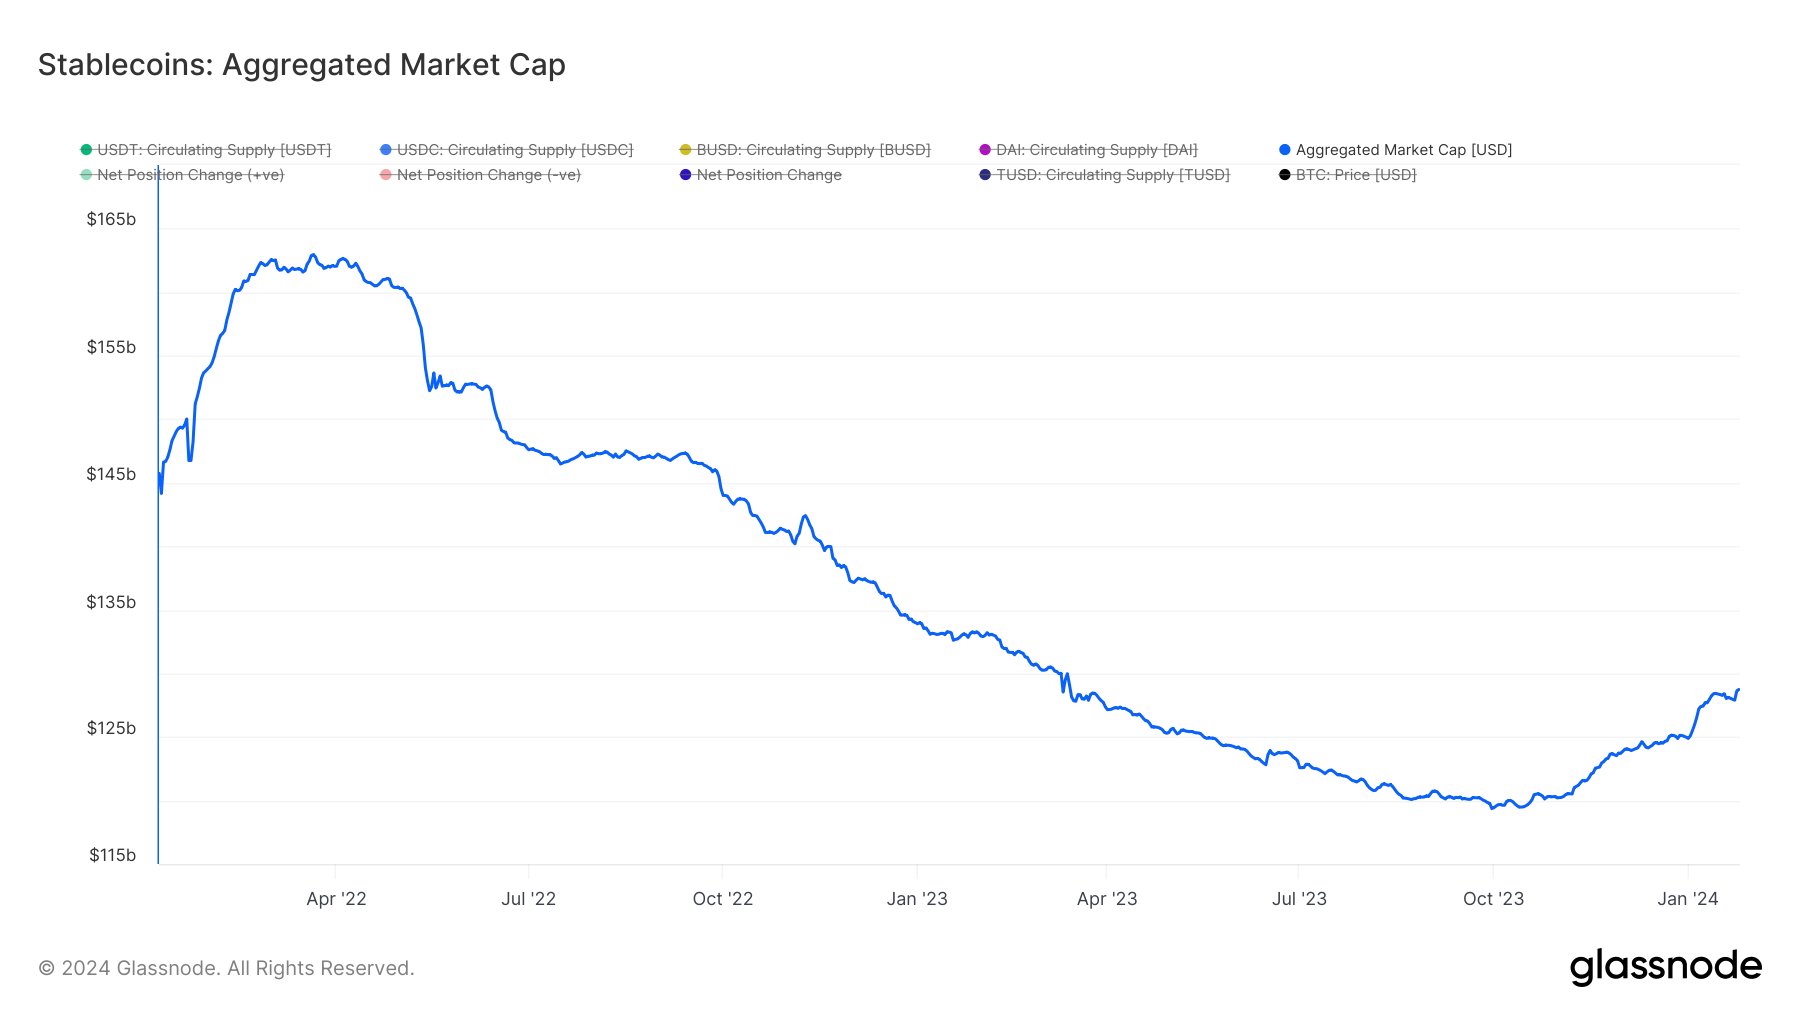 Stablecoin aggregated market cap